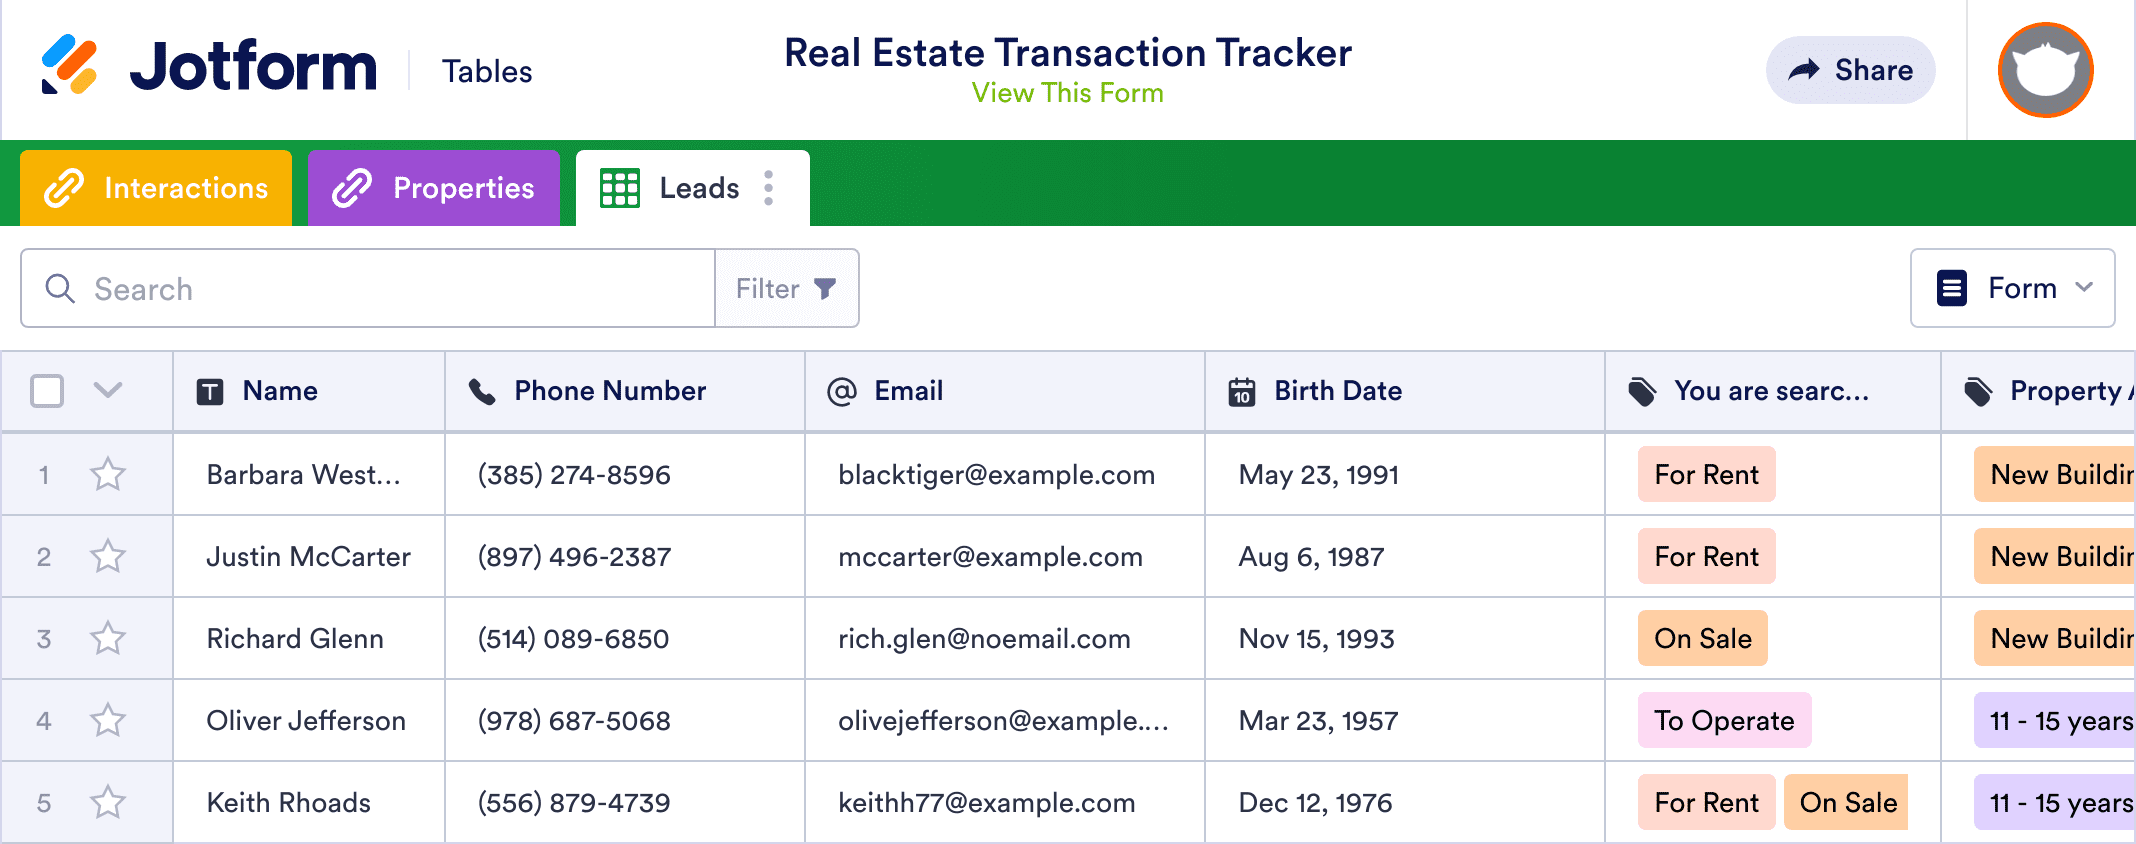 Real Estate Transaction Tracker Template | Jotform Tables